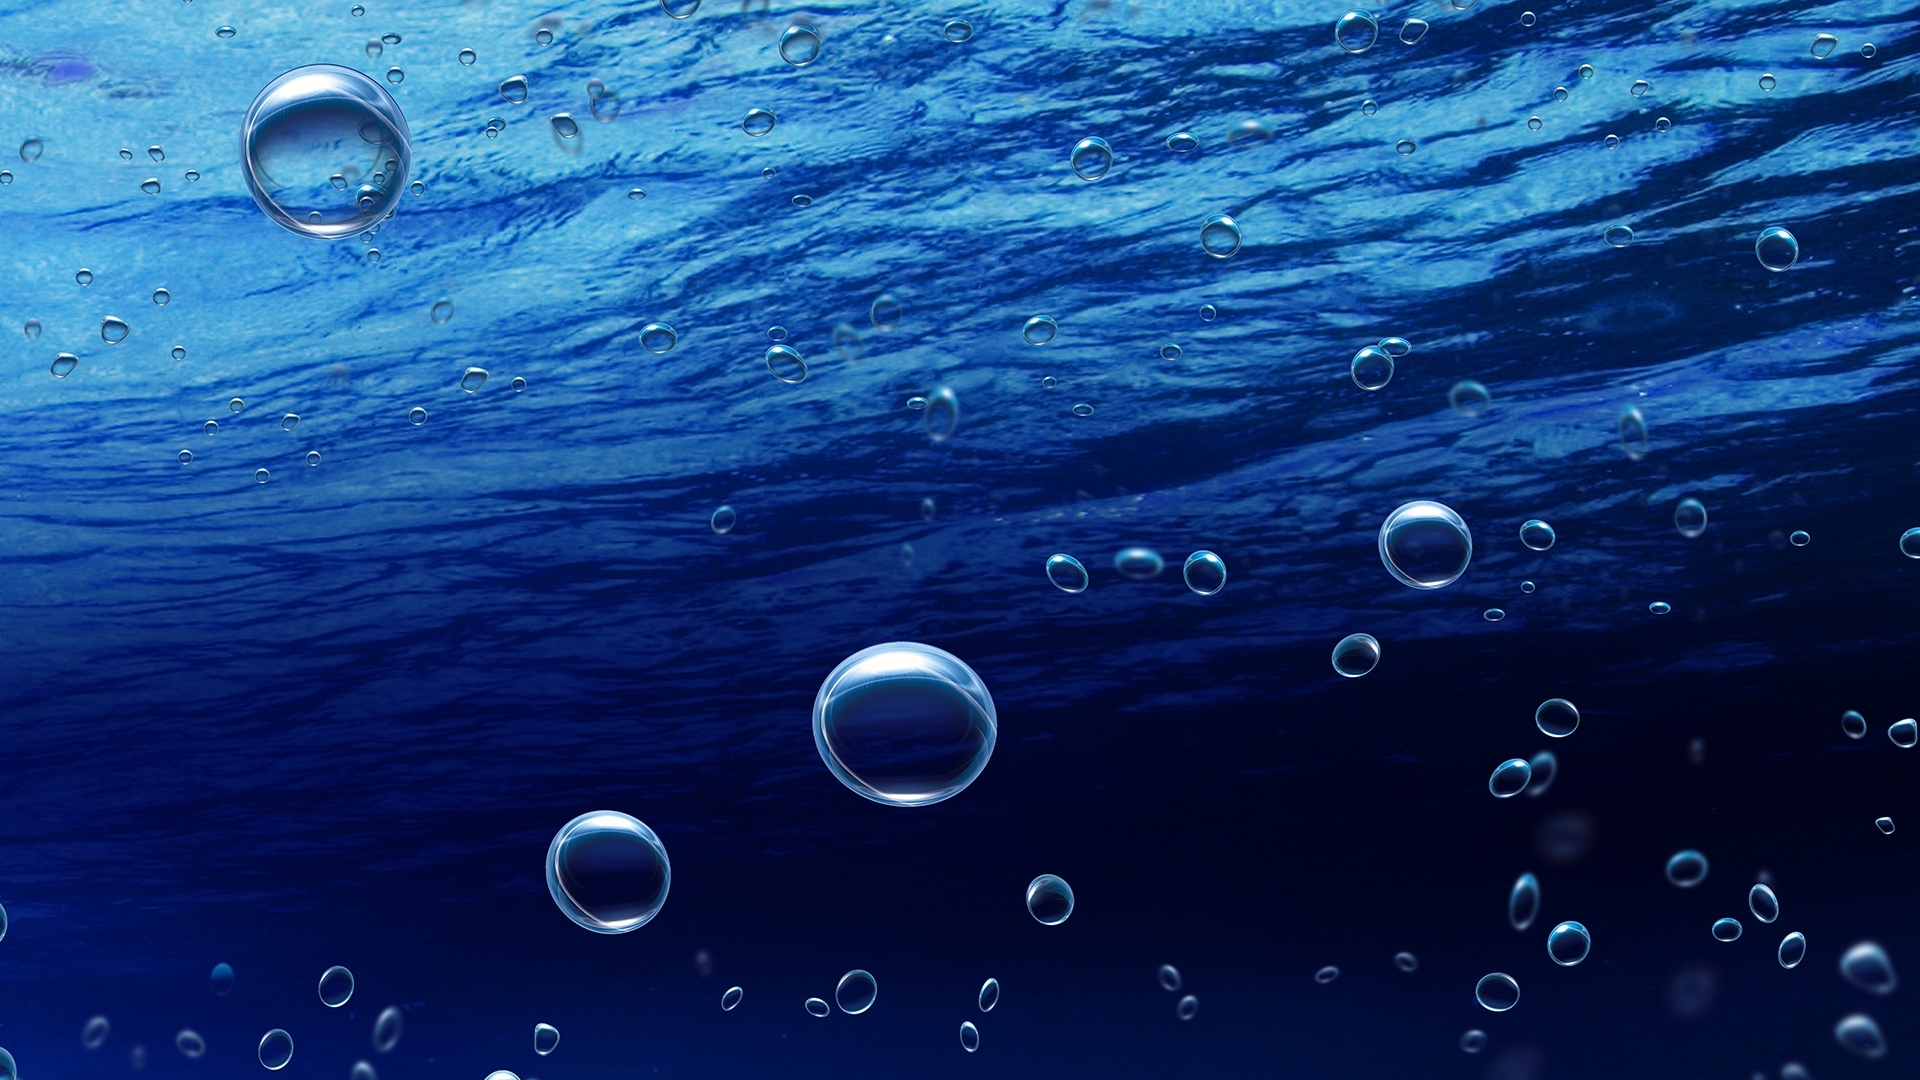 30397 descargar imagen bubbles, agua, fondo, azul: fondos de pantalla y protectores de pantalla gratis